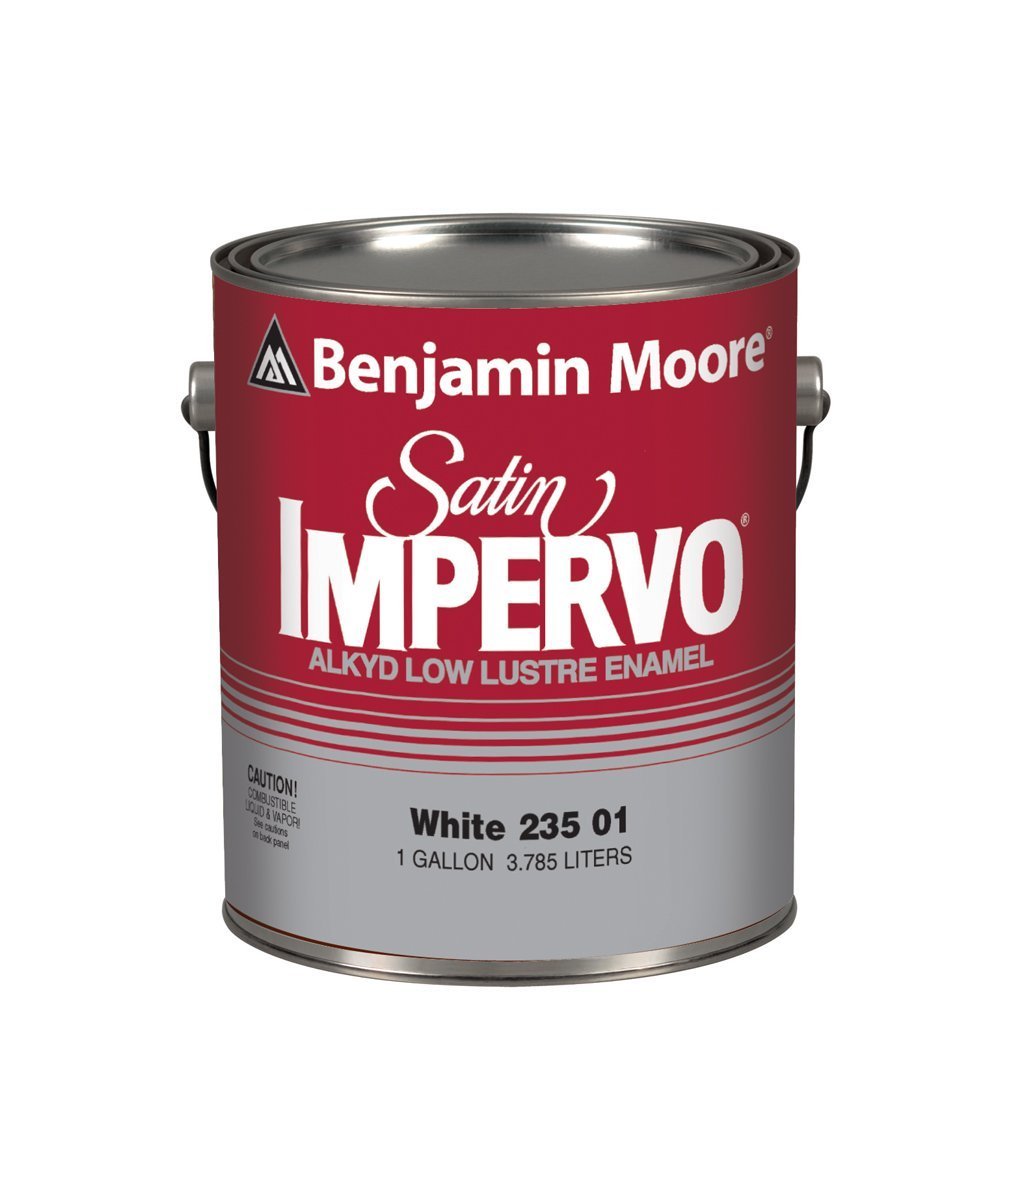 Benjamin Moore Satin Impervo interior paint available at JC Licht.